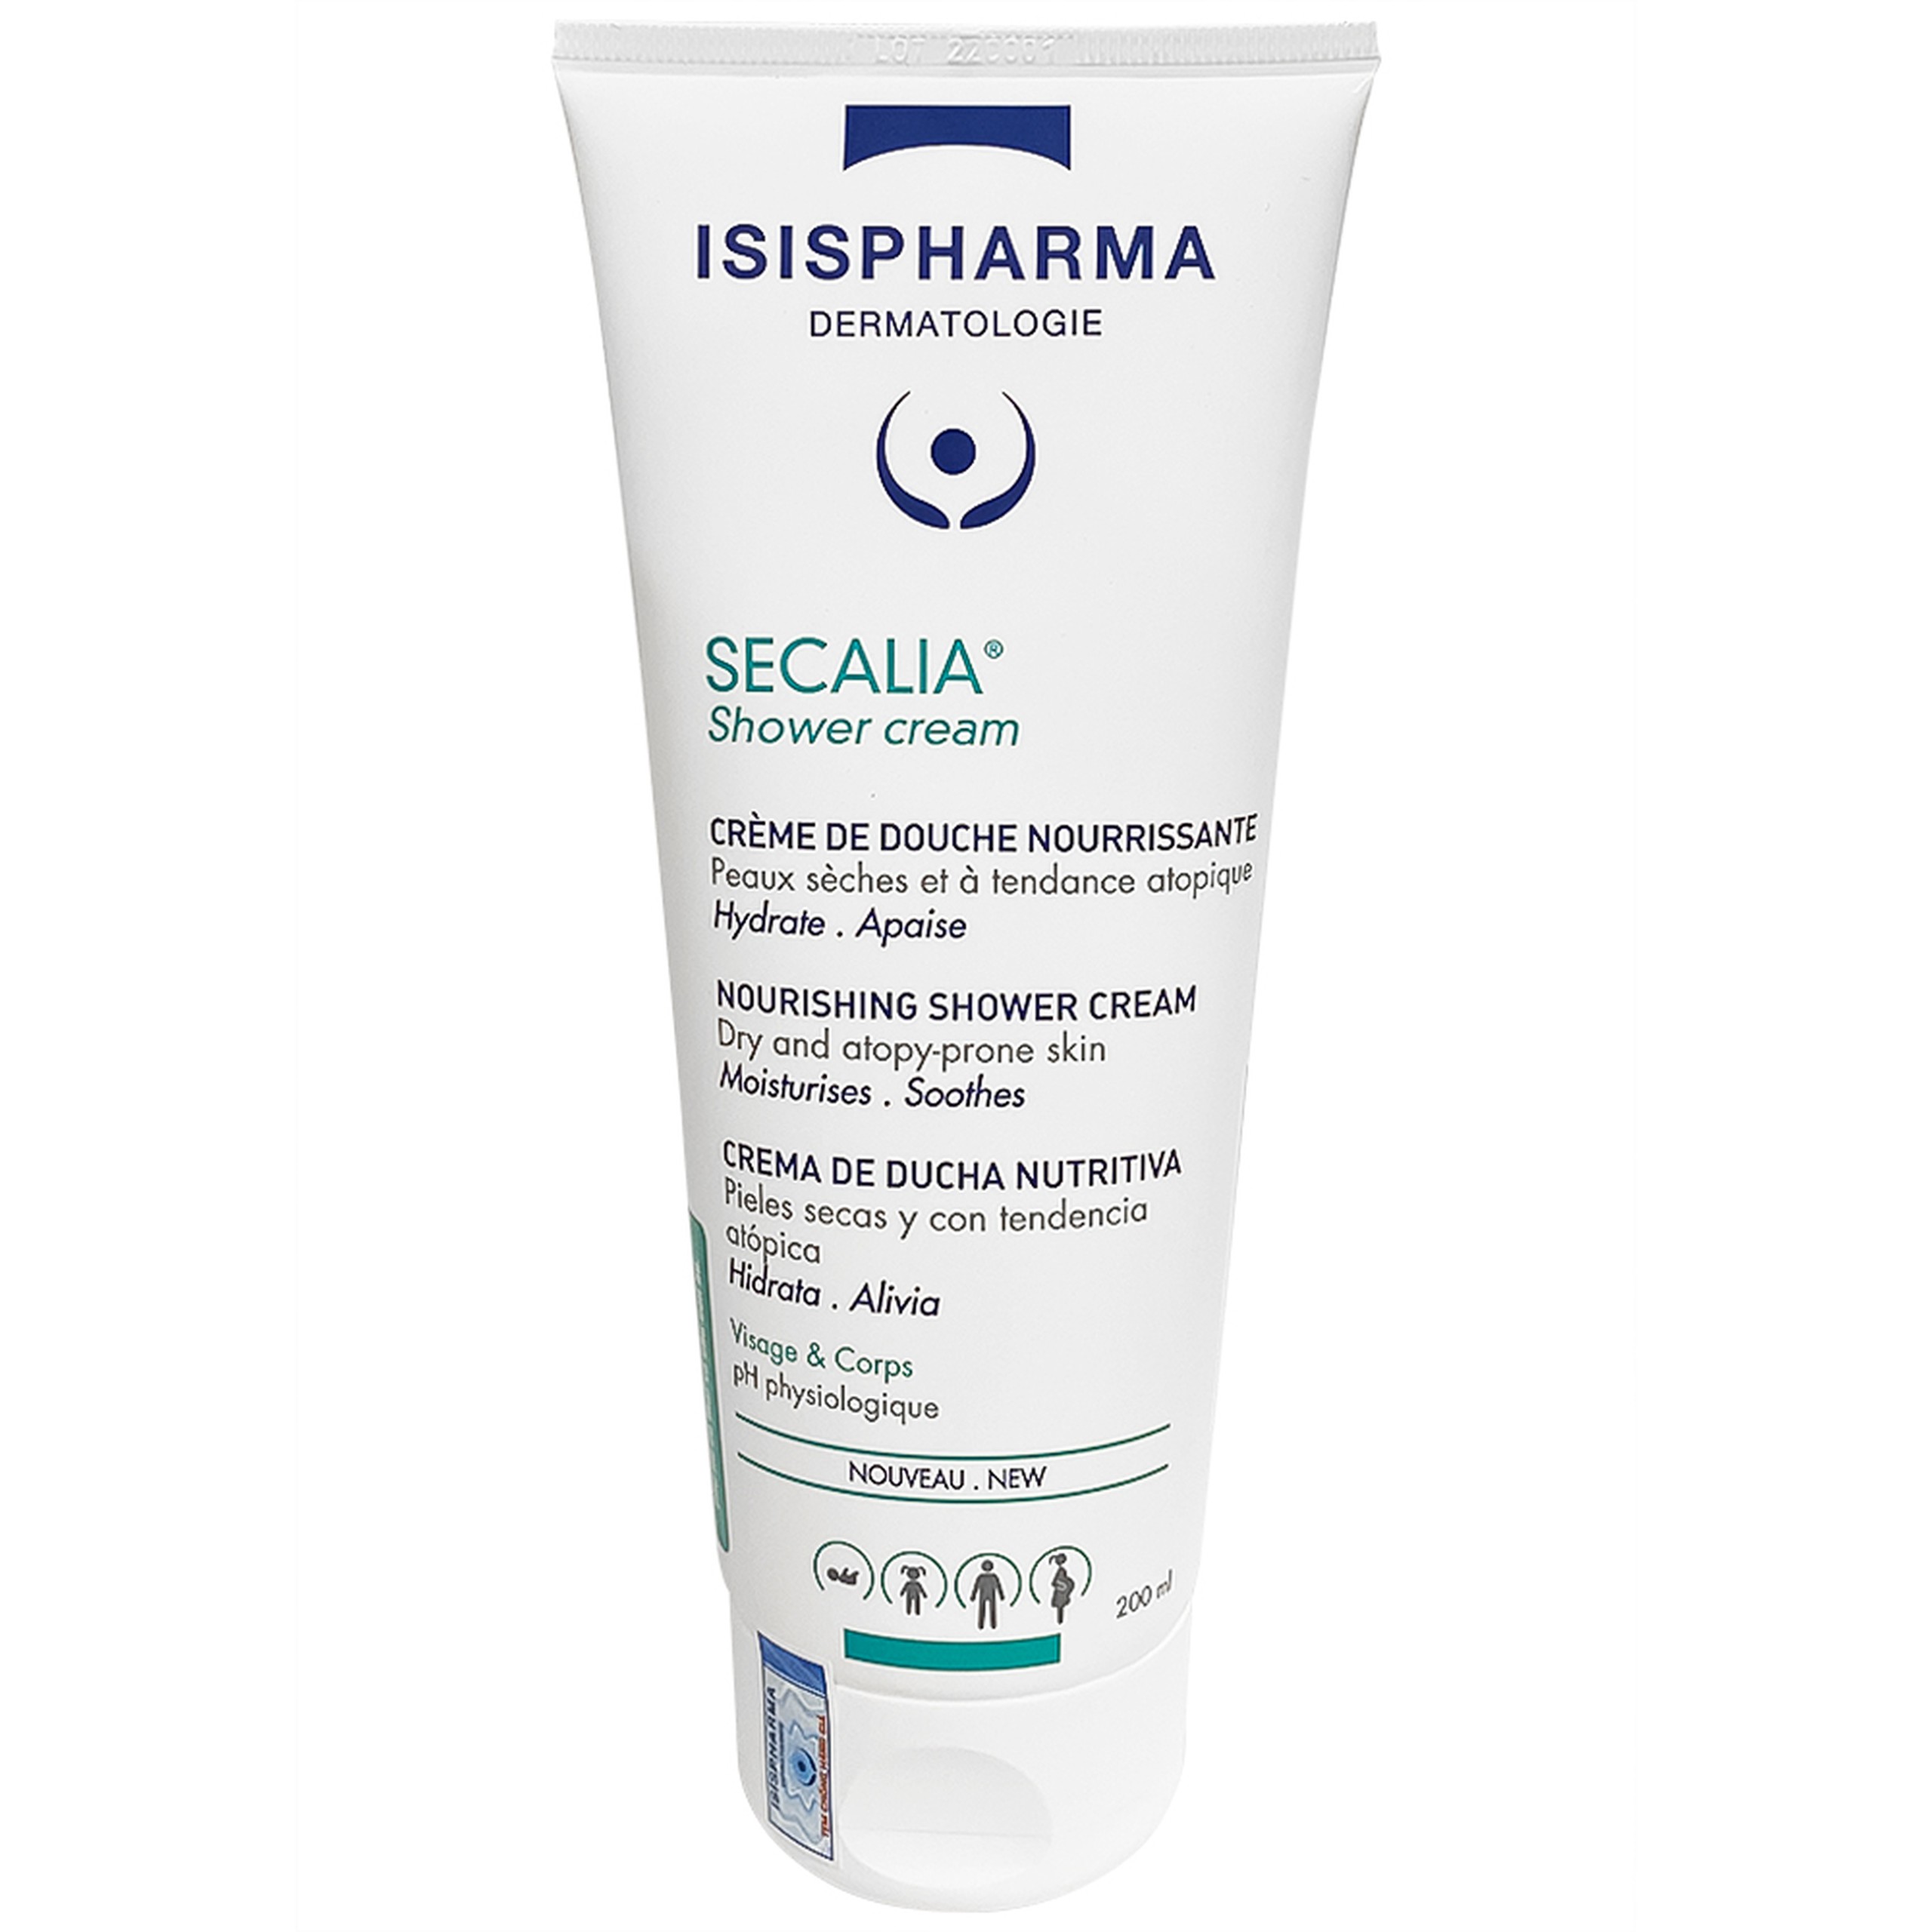 Sữa tắm Secalia Shower Cream IsisPharma dưỡng da, giảm khô da, giảm ngứa (200ml)